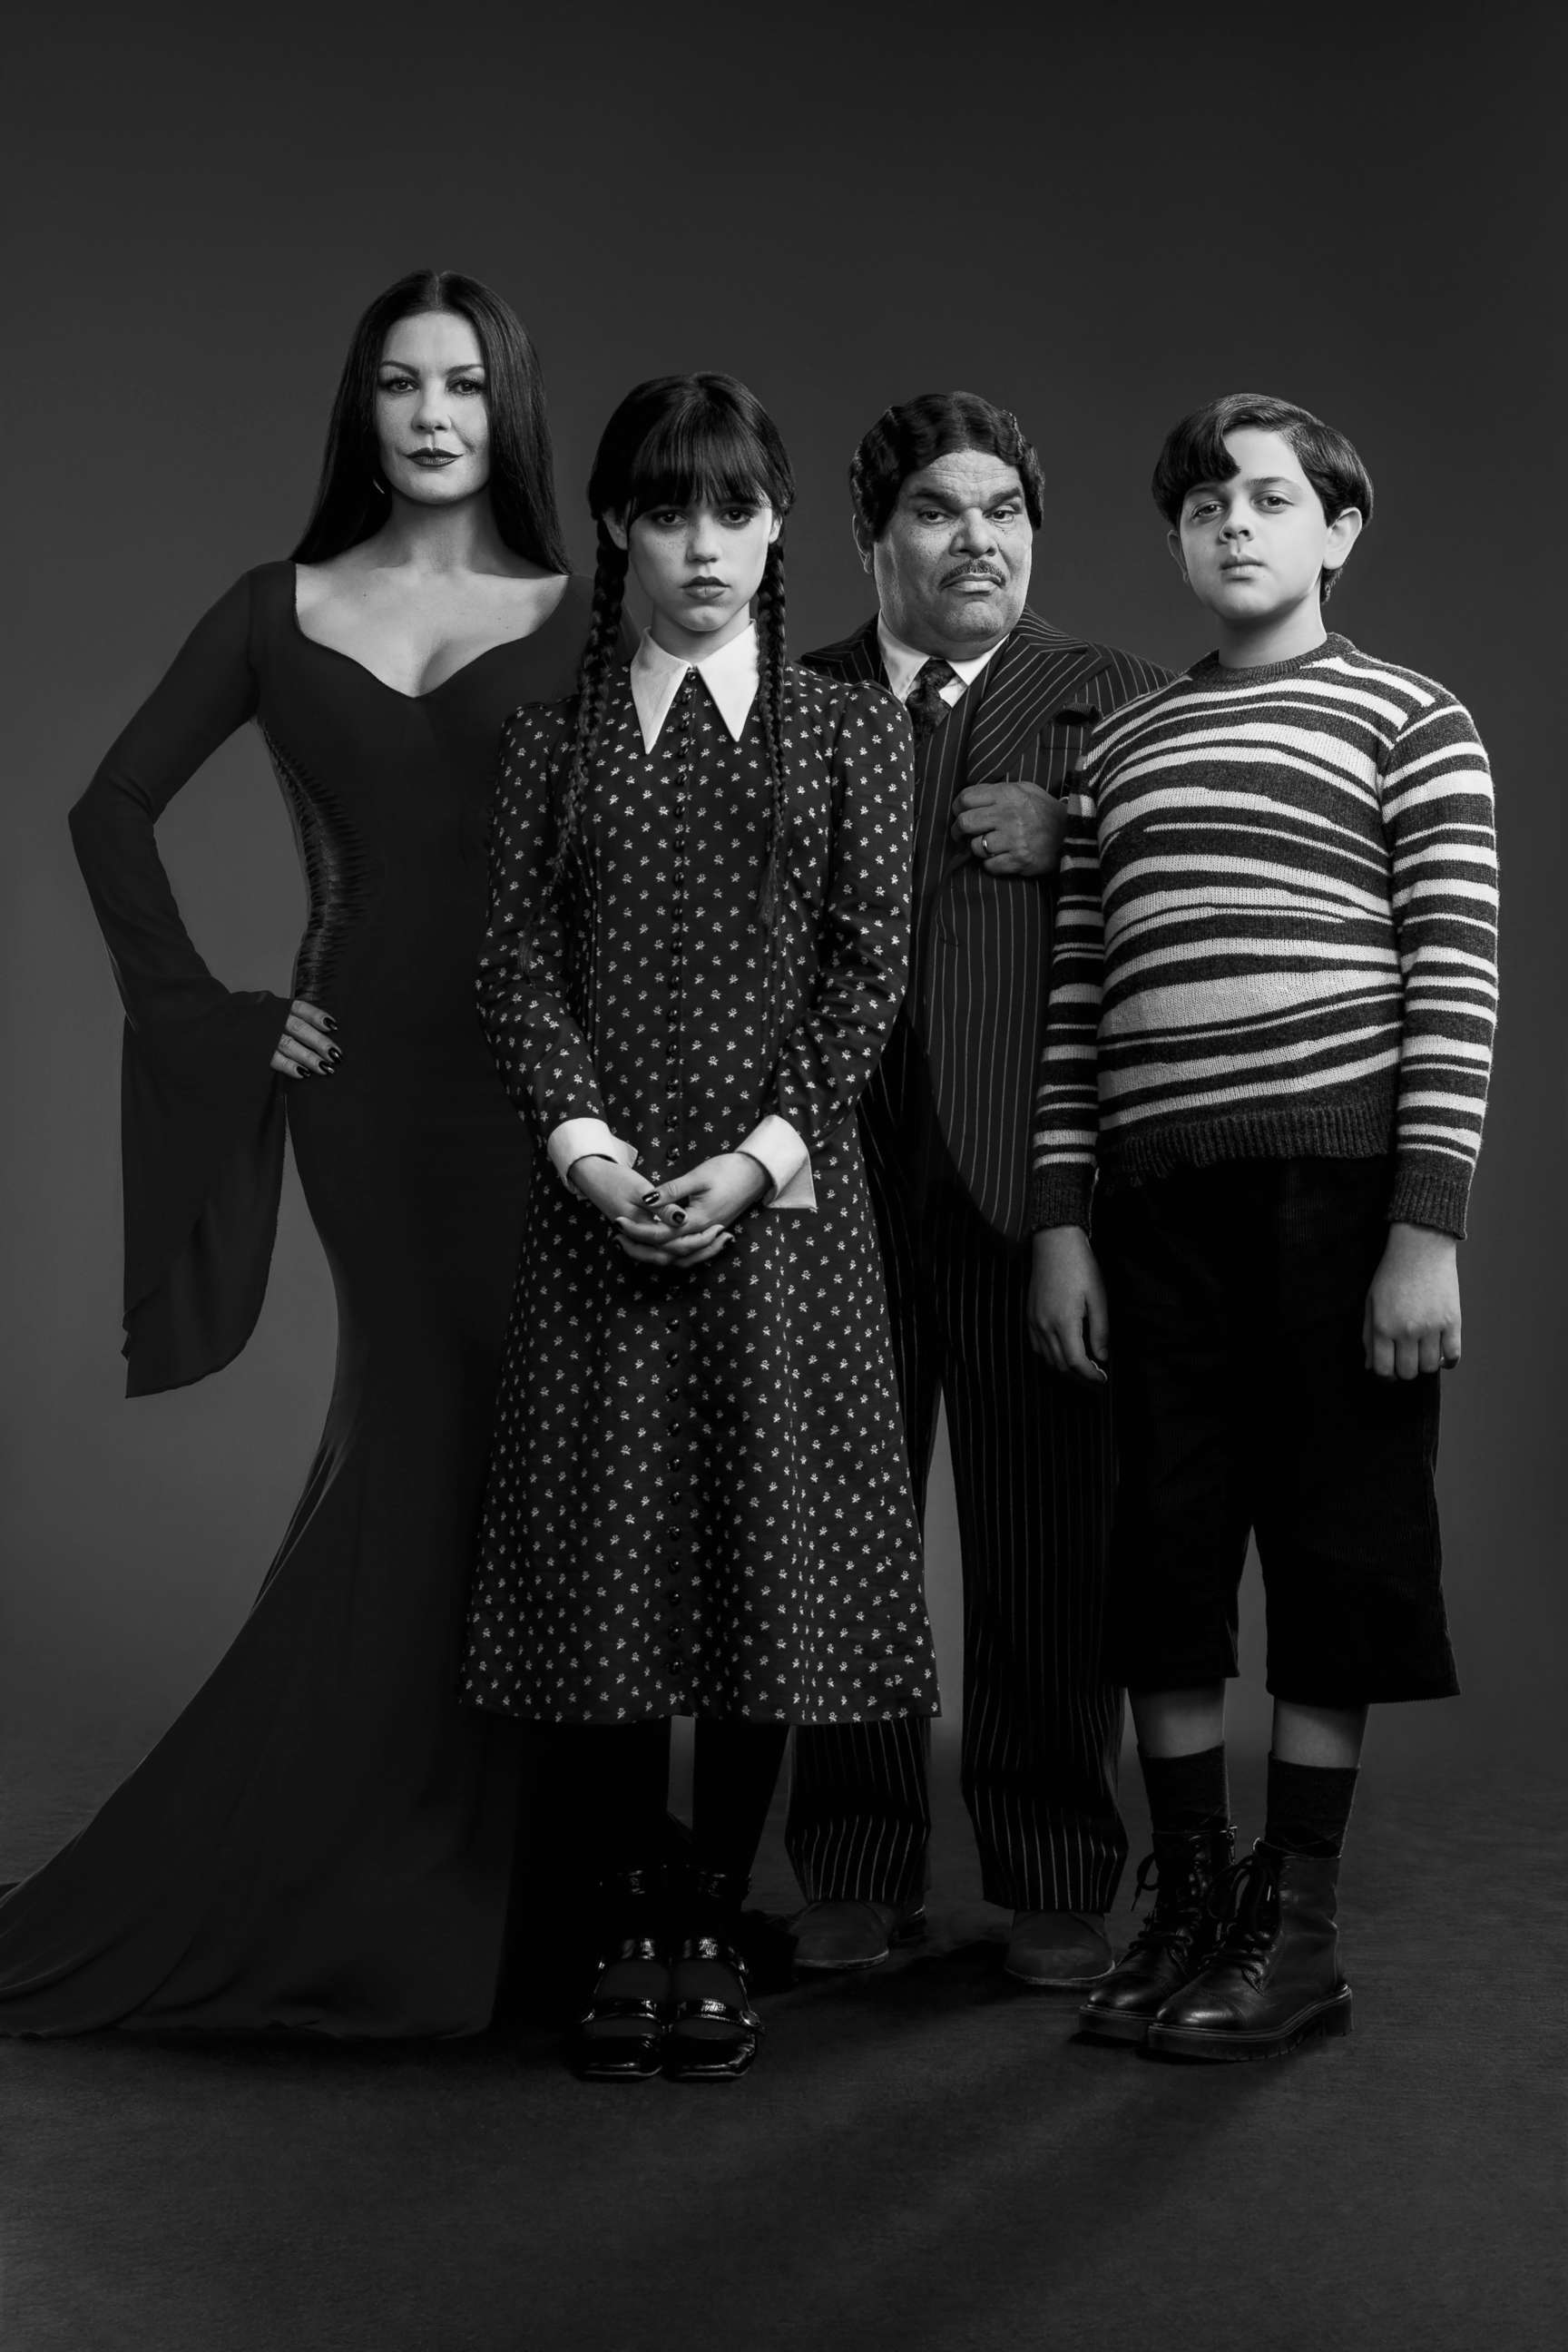 Jenna Ortega transforms into Wednesday Addams in new trailer - ABC